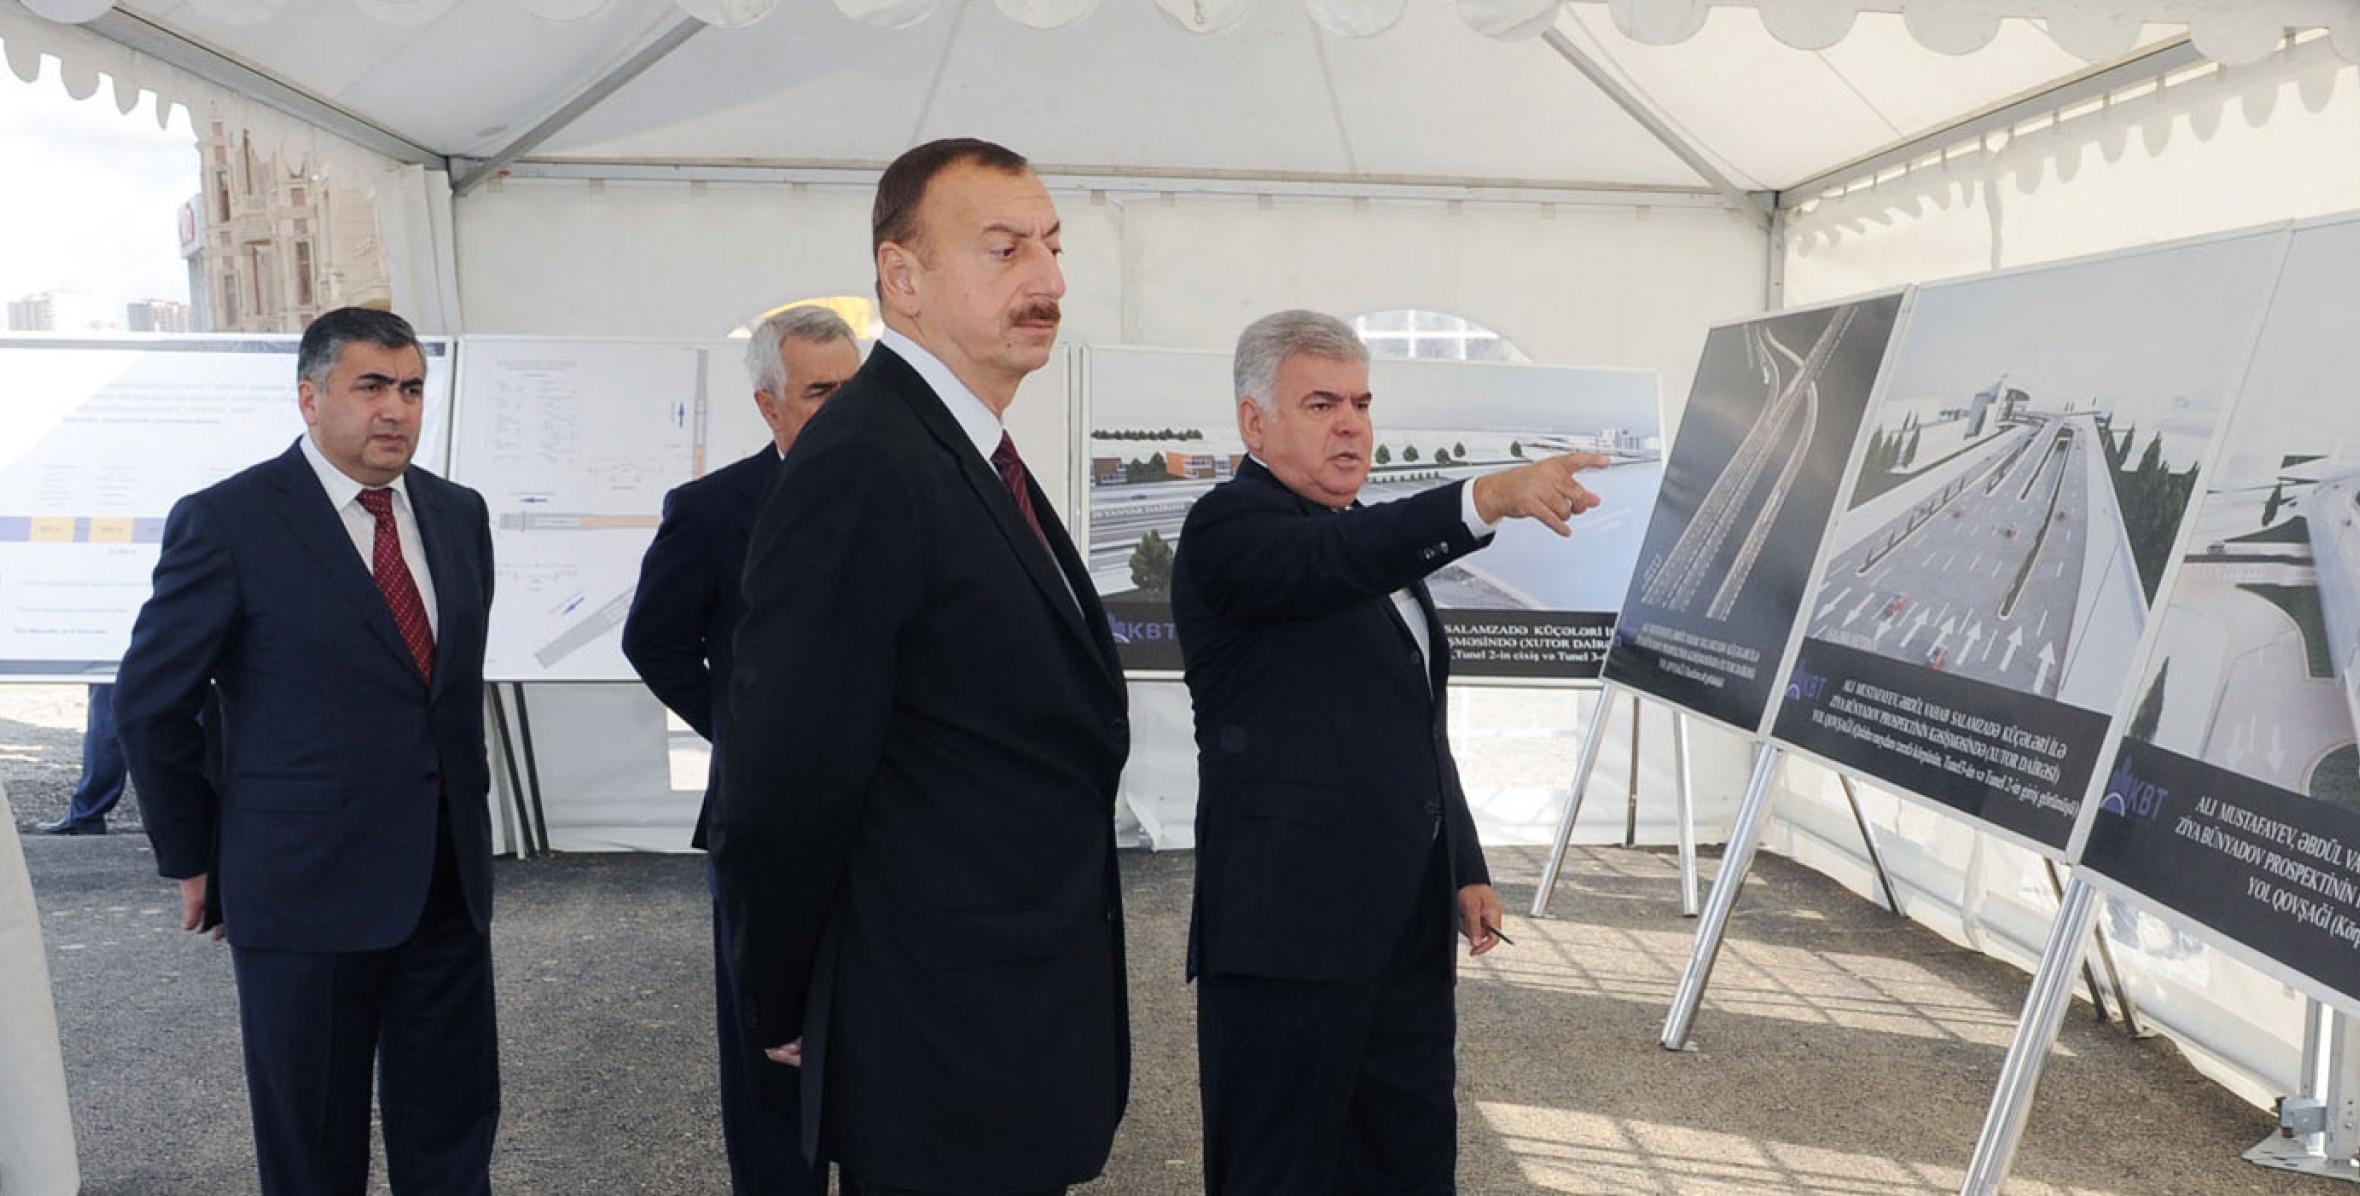 Ilham Aliyev reviewed the plan of road junctions and highways under construction in Ziya Bunyadov Avenue